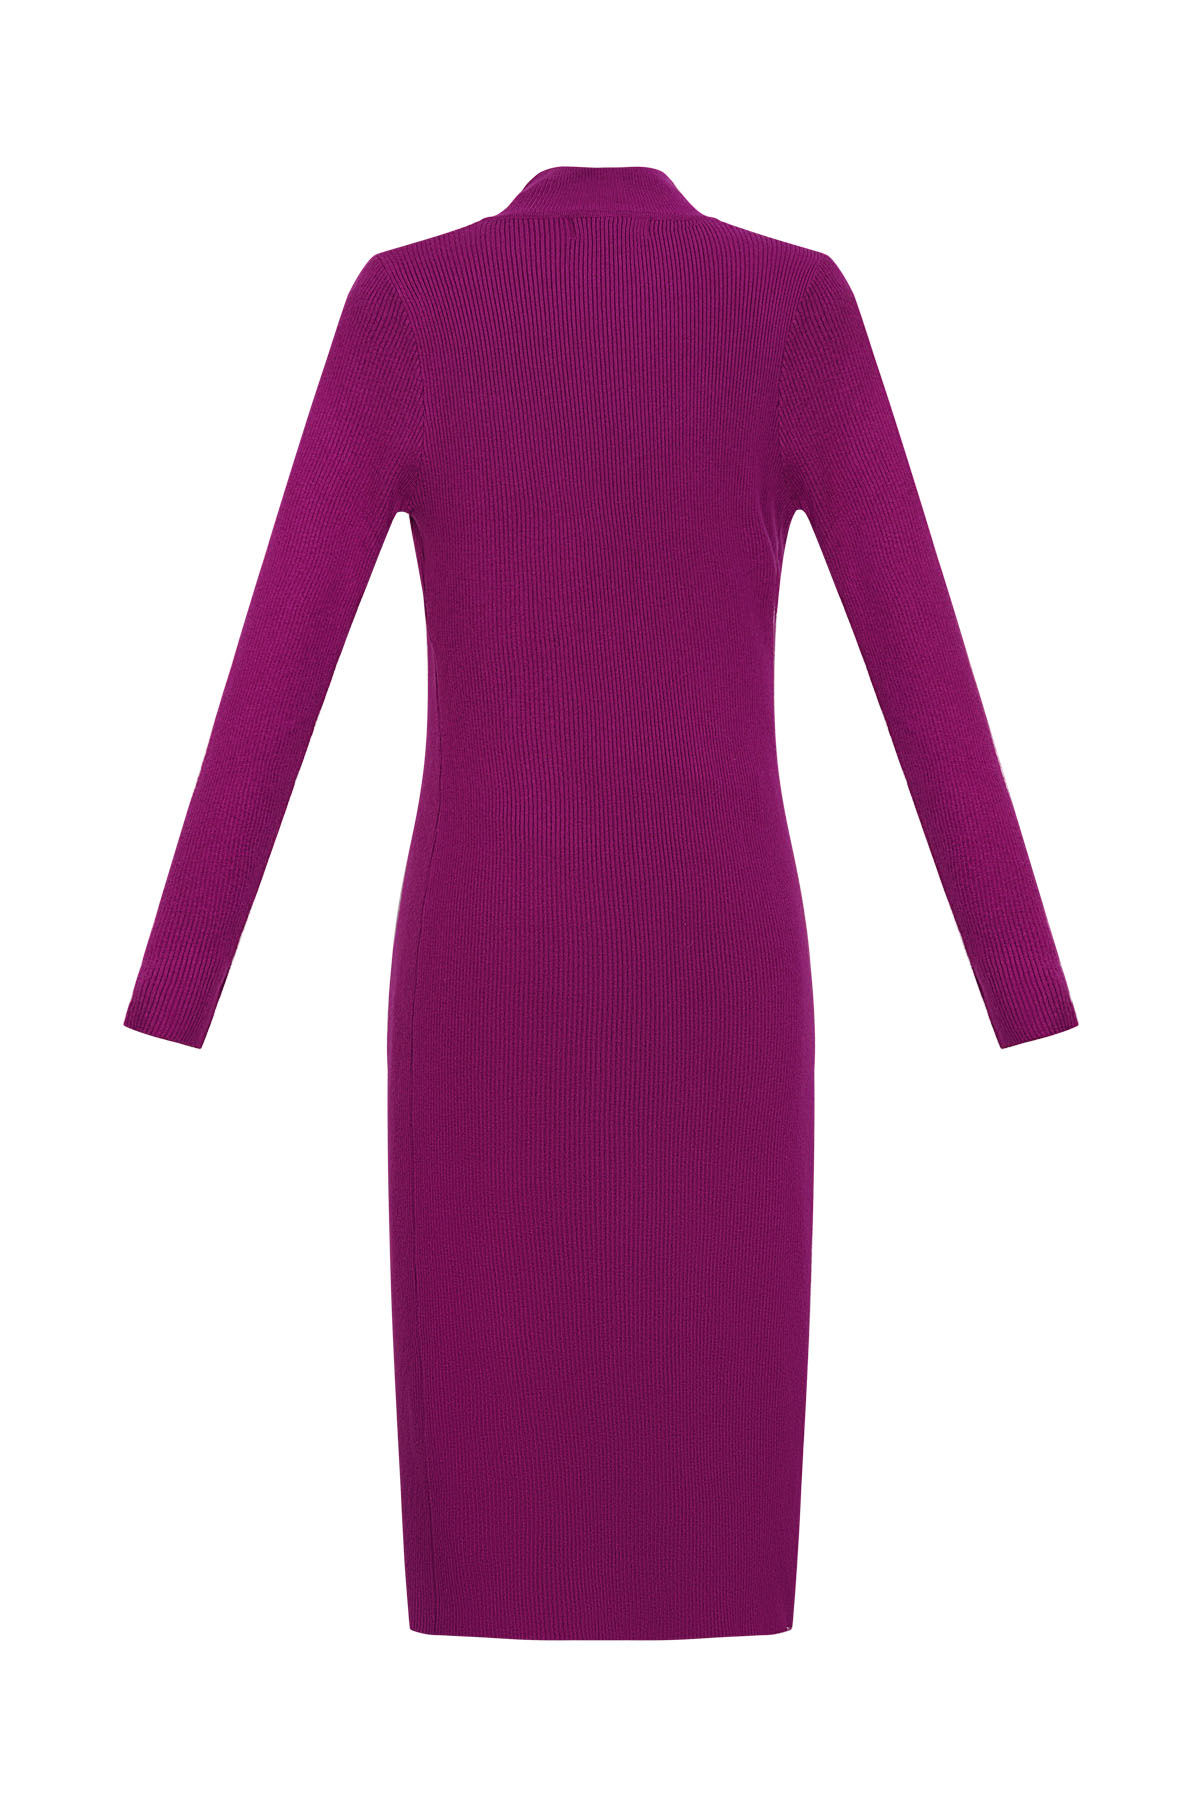 Midi dress with slit - purple Picture7